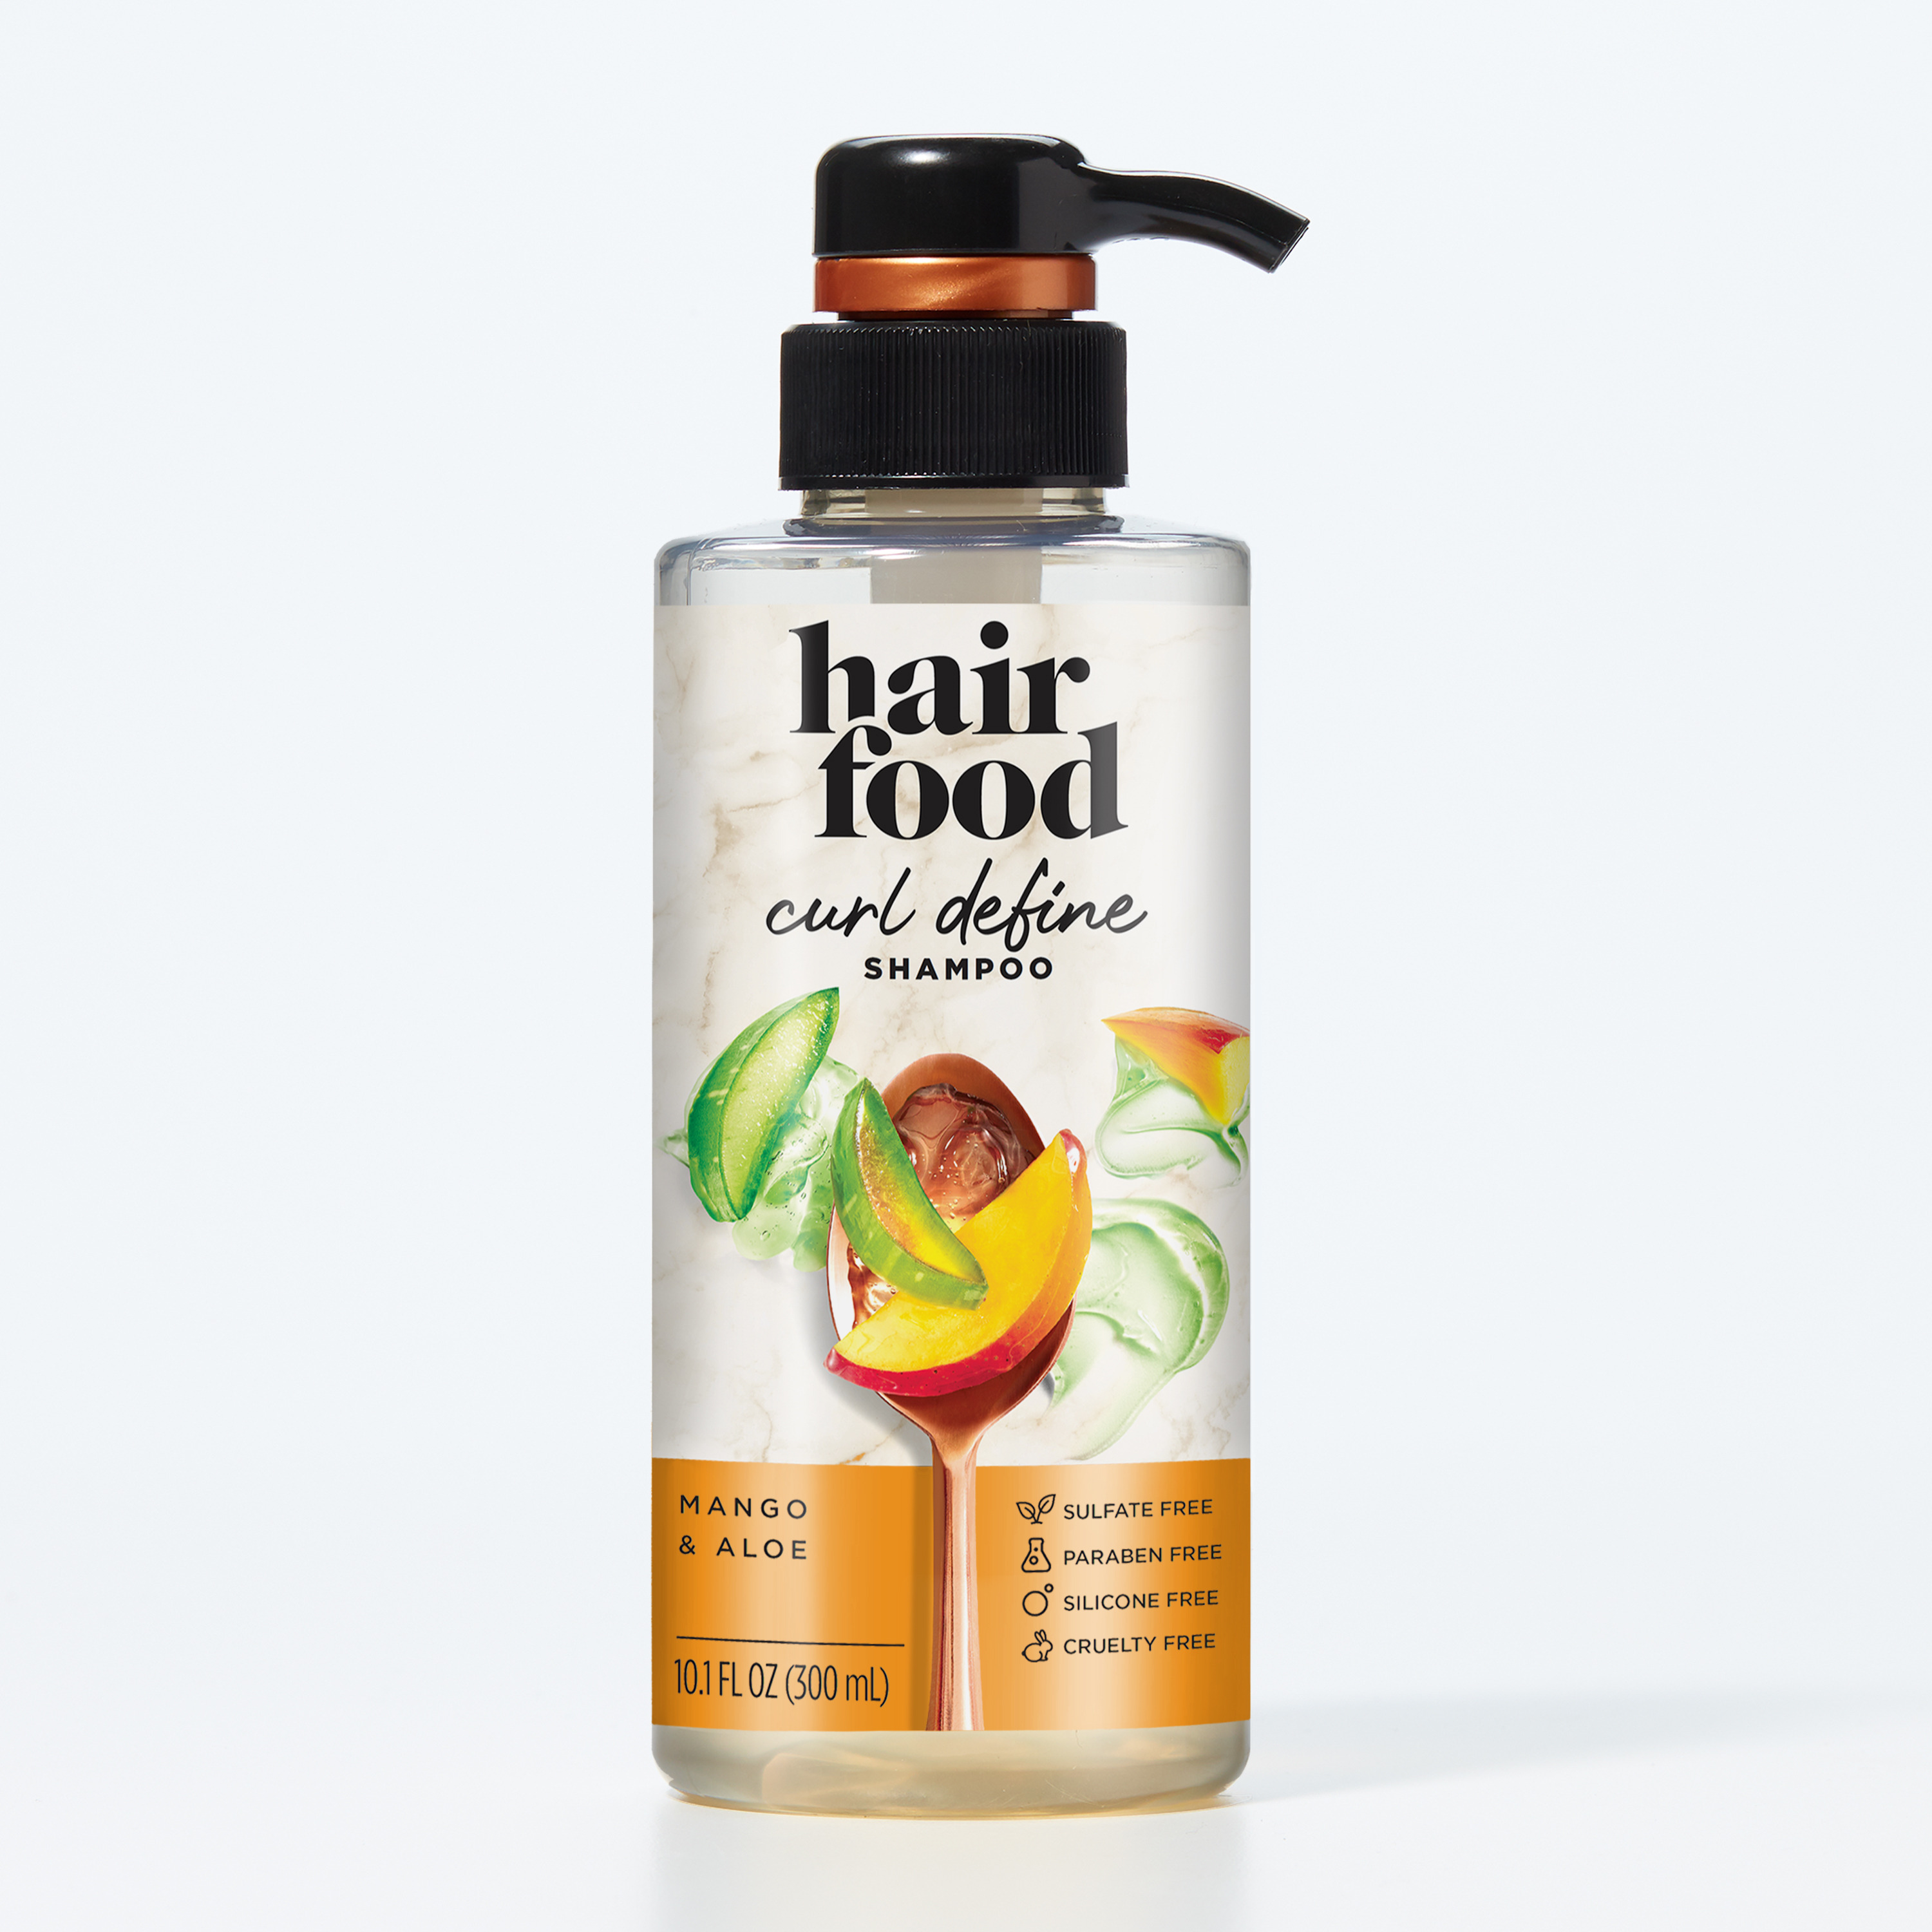 Hair Food Mango & Aloe Curl Definition Shampoo, for Curly Hair, 10.1 fl oz - image 1 of 12